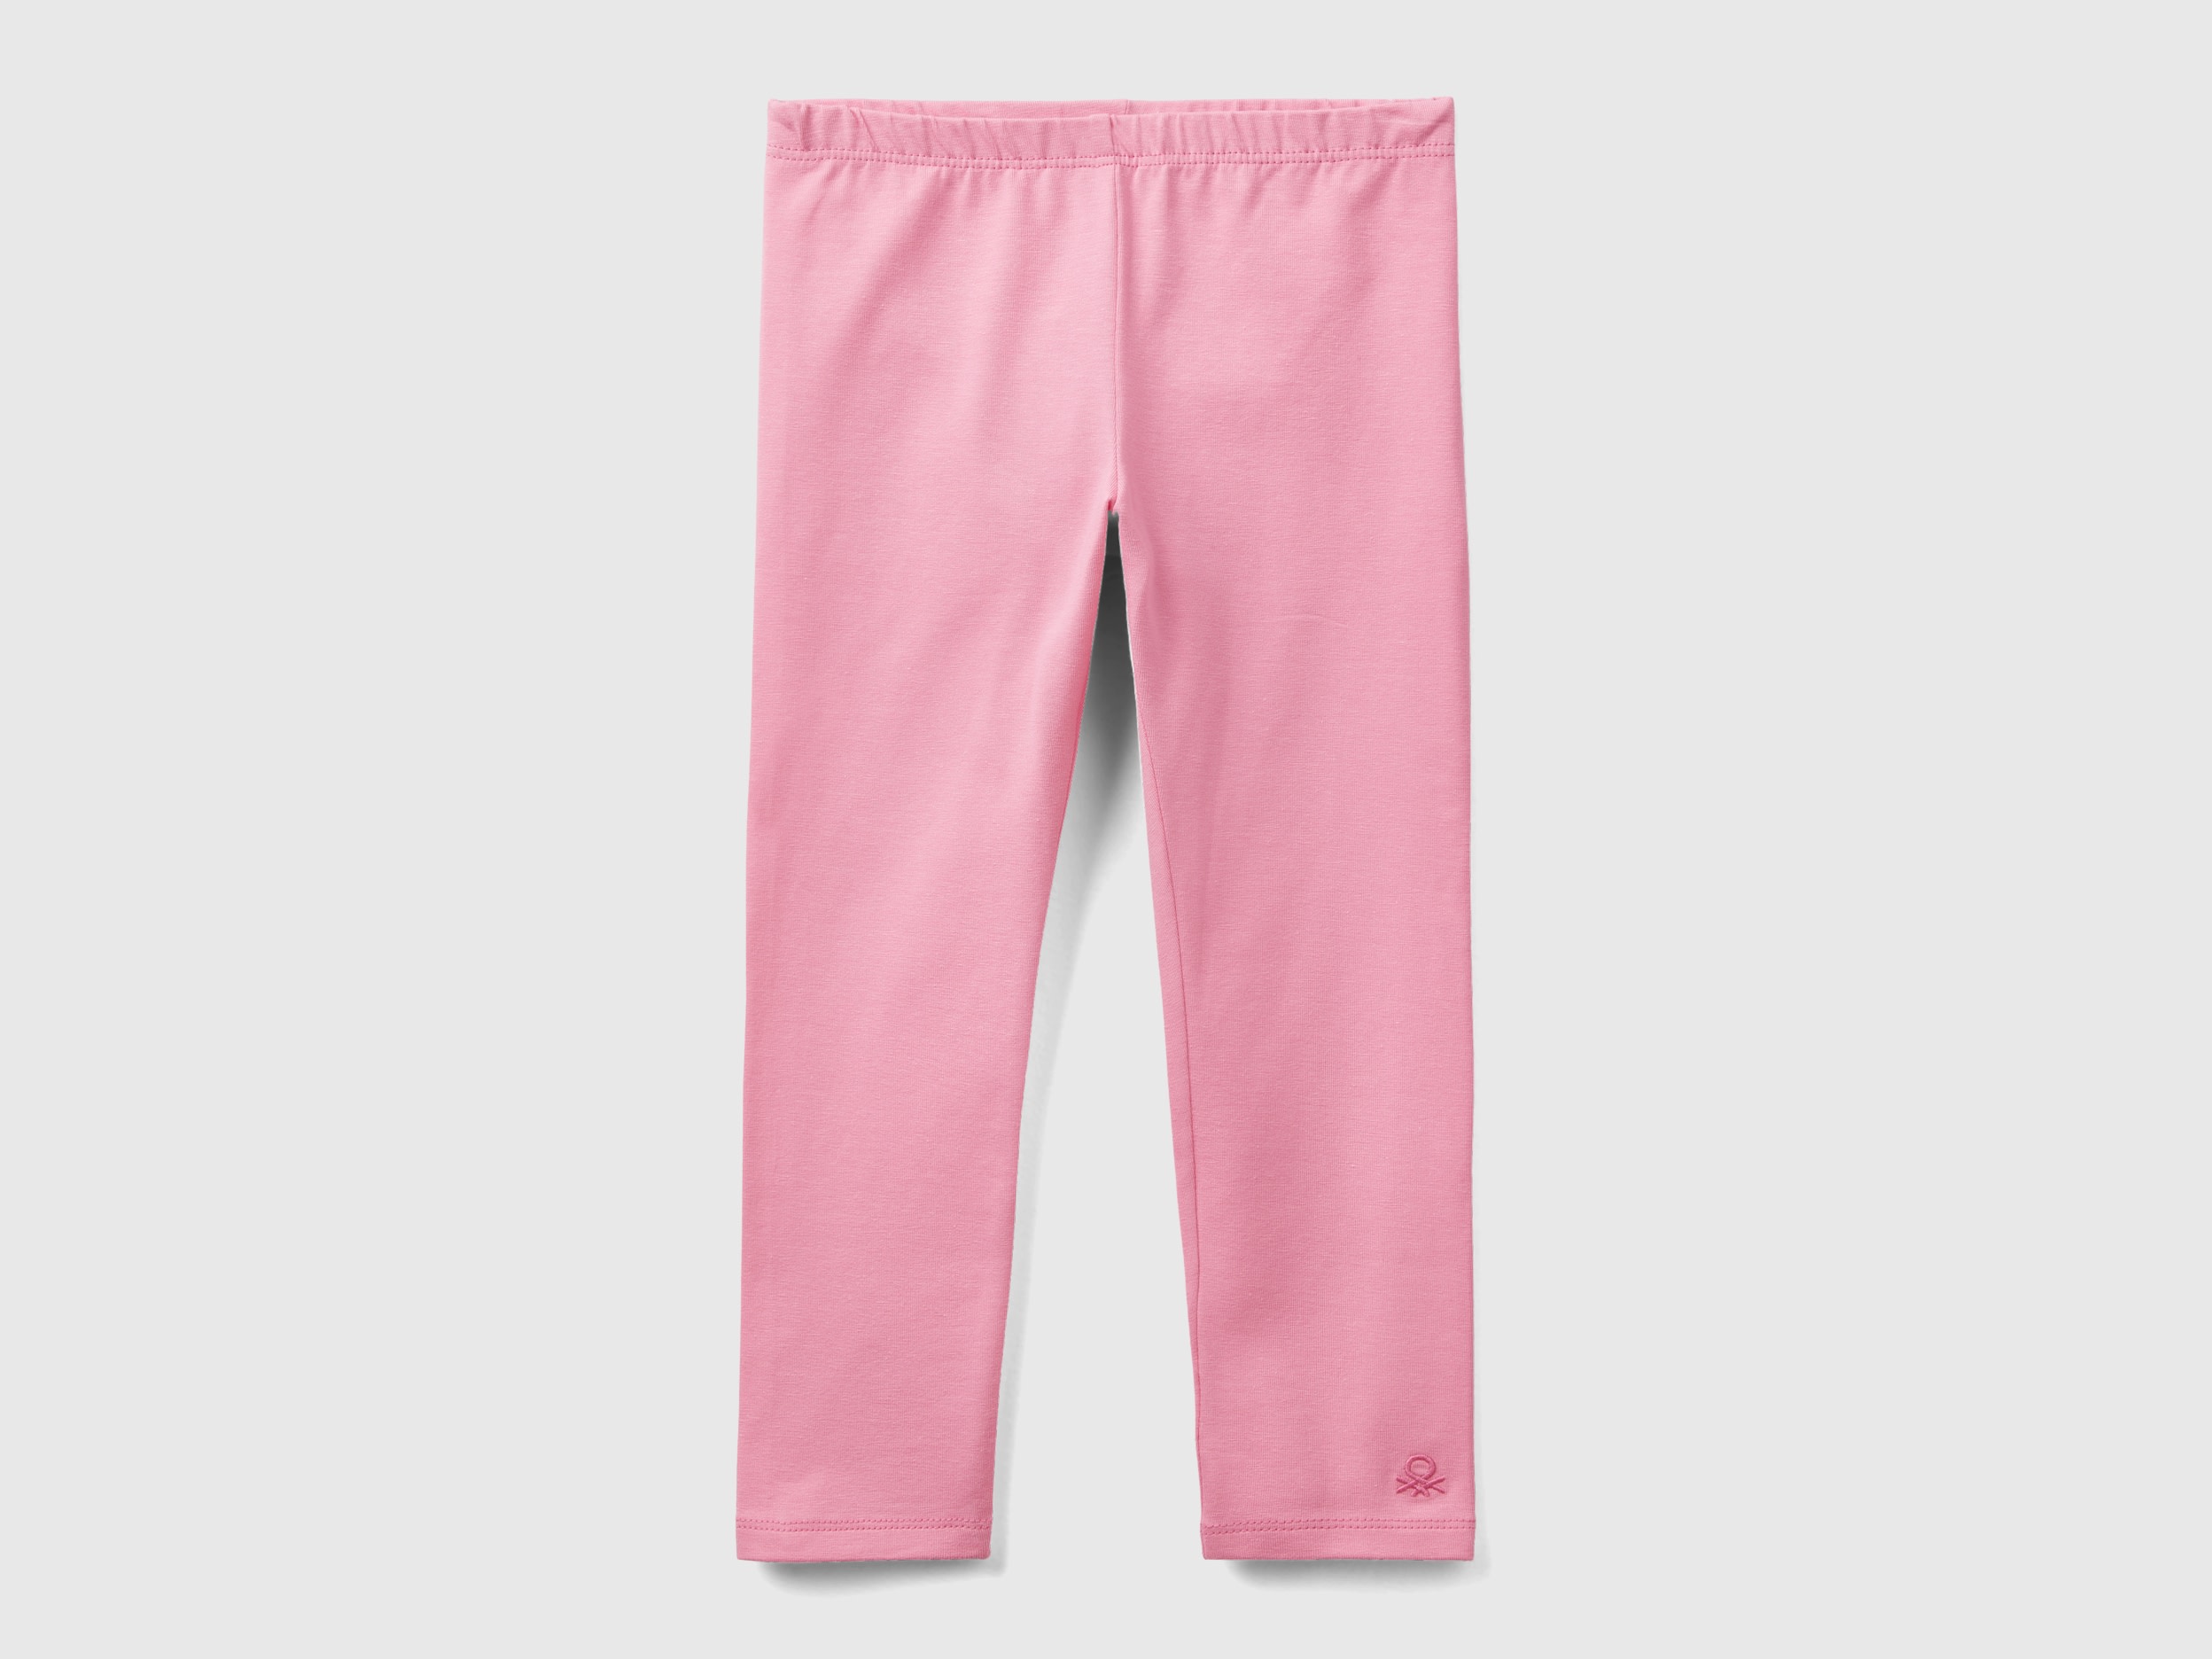 Benetton, Stretch Cotton Leggings, size 18-24, Pink, Kids